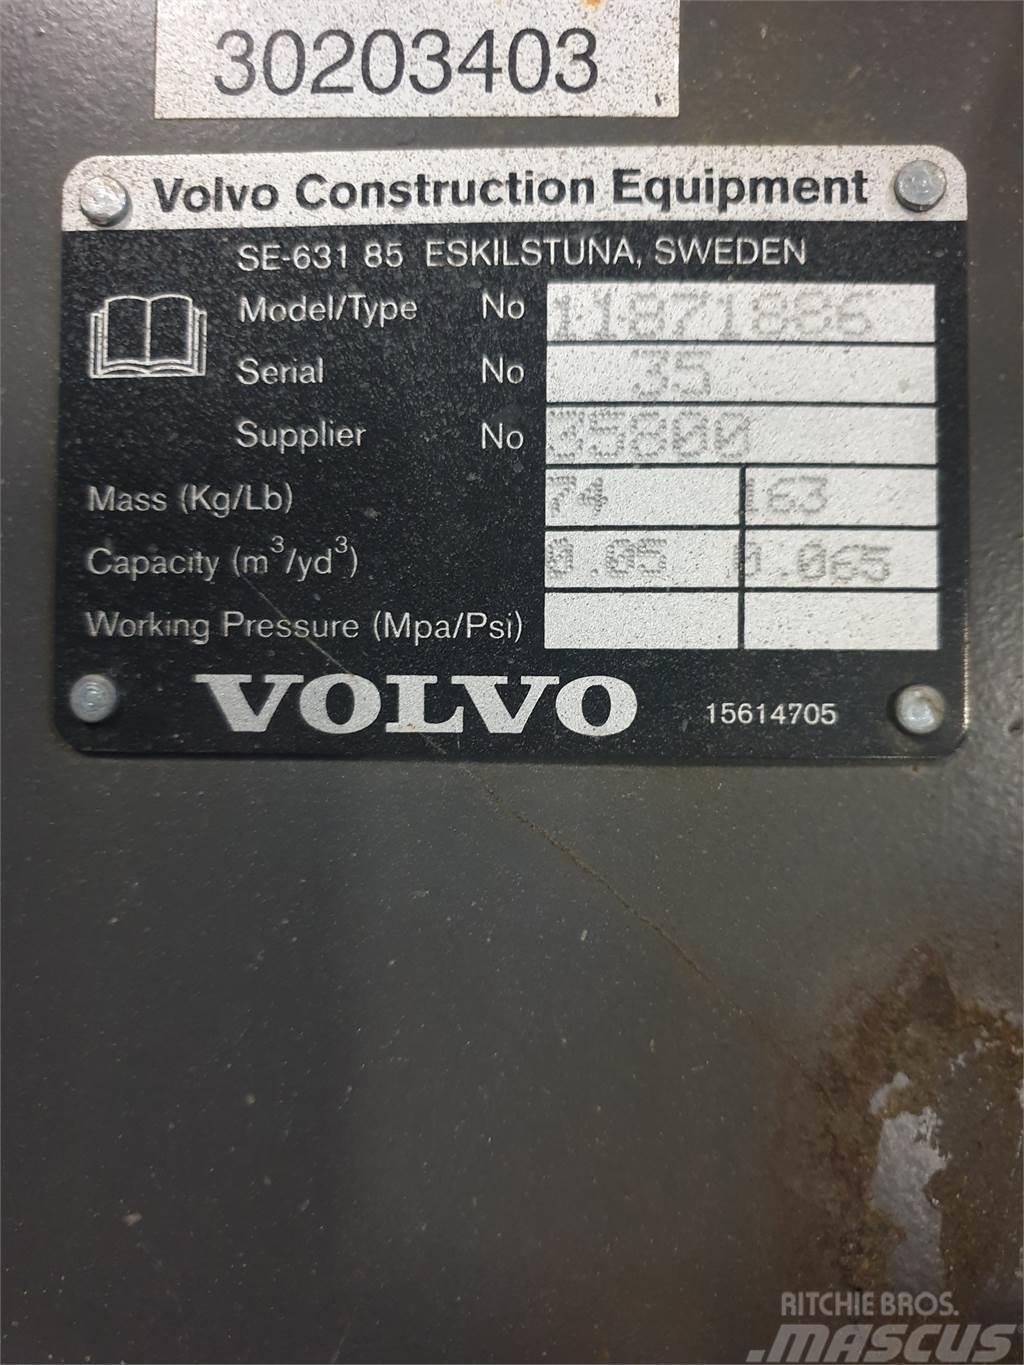 Volvo Kabelskopa S40 300mm Skopor